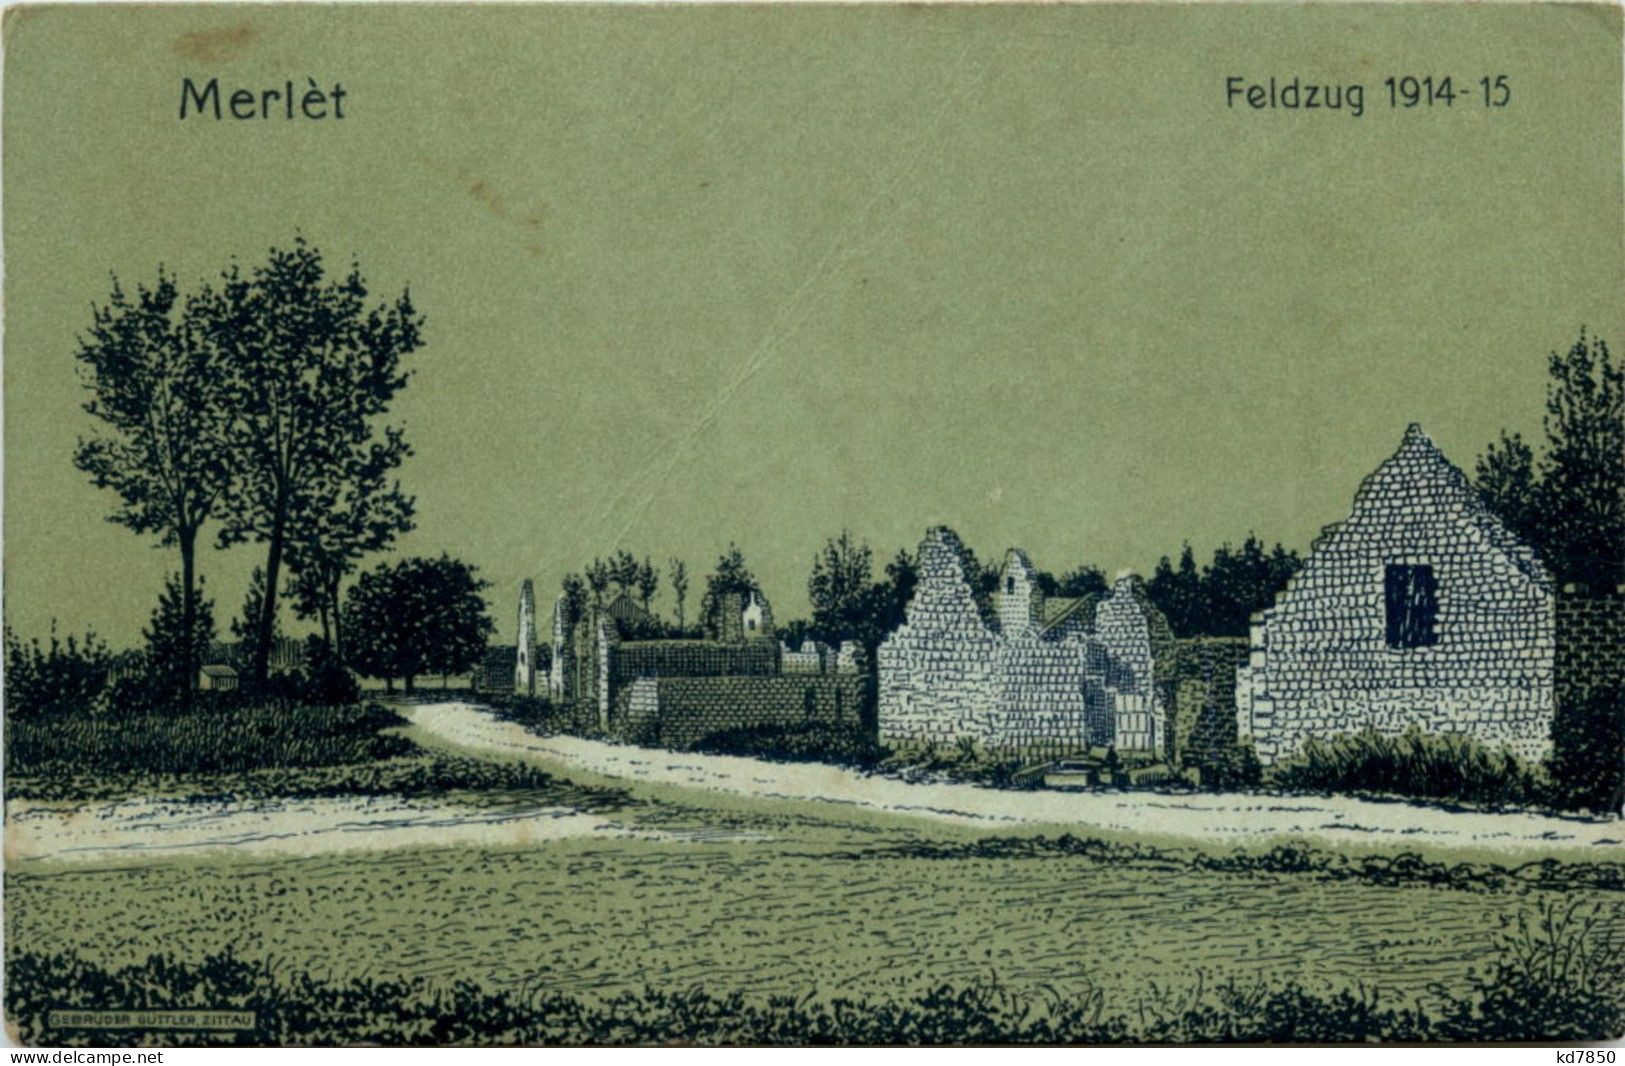 Merlet - Feldzug 1914-15 - Weltkrieg 1914-18